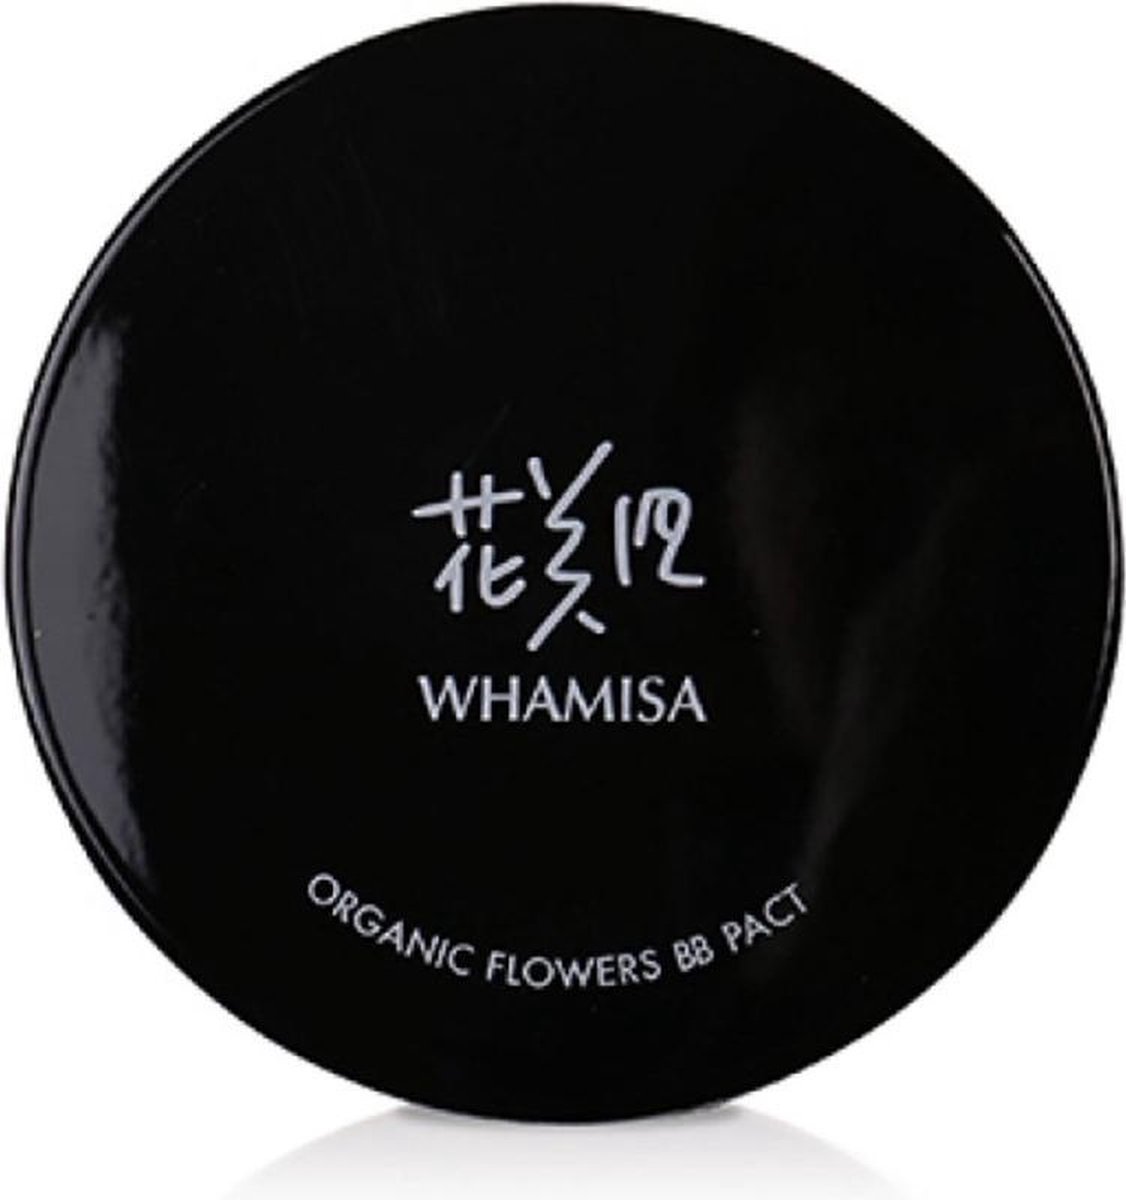 Whamisa Organic Flowers BB Pact Natural Expression Sun Cushion SPF 50+ PA++++ 23 NB 16 g